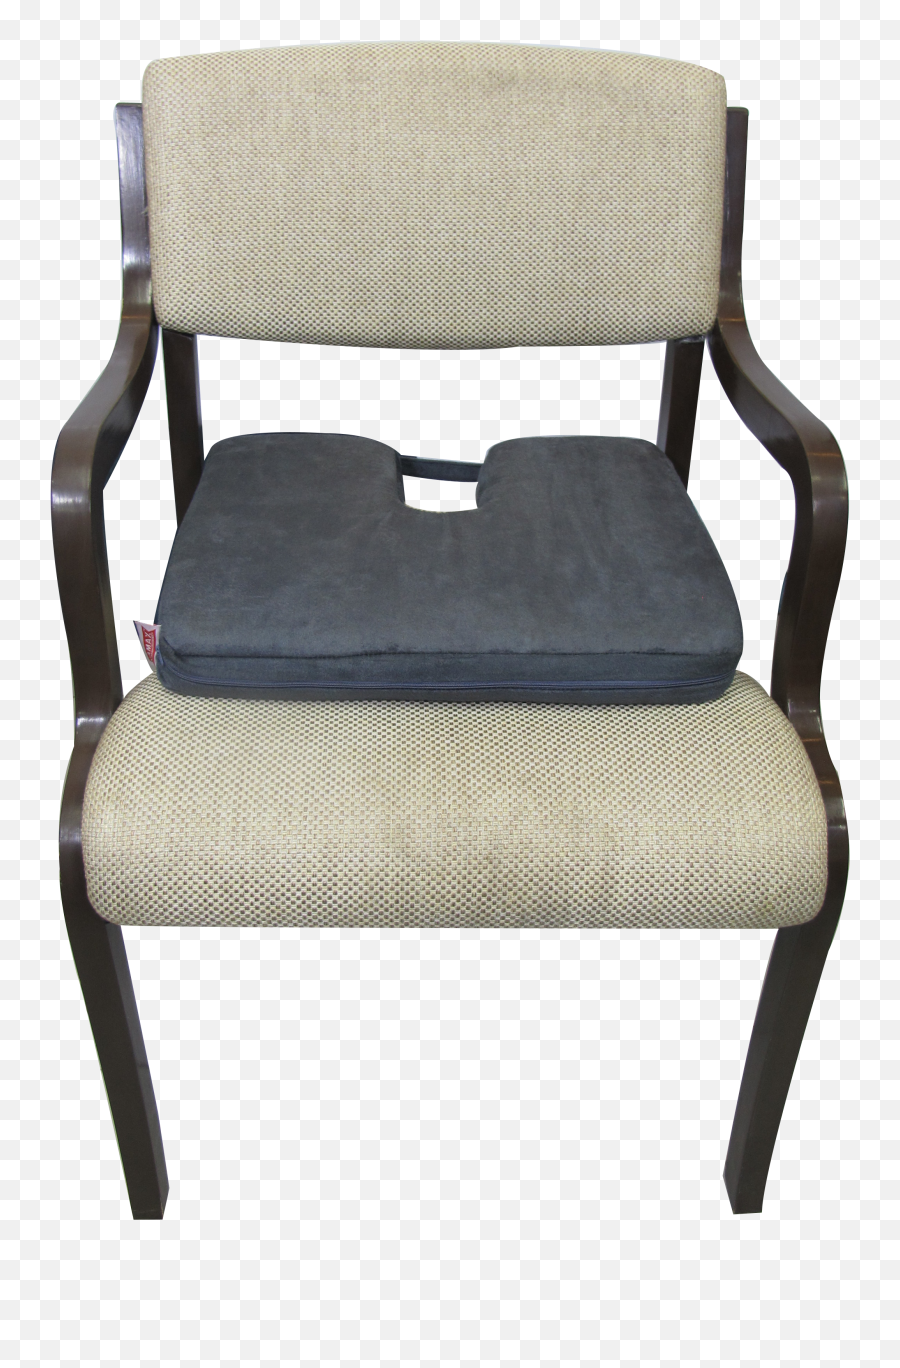 Xamax Coccyx Cushion - Office Chair Emoji,Braces Emoji Pillow